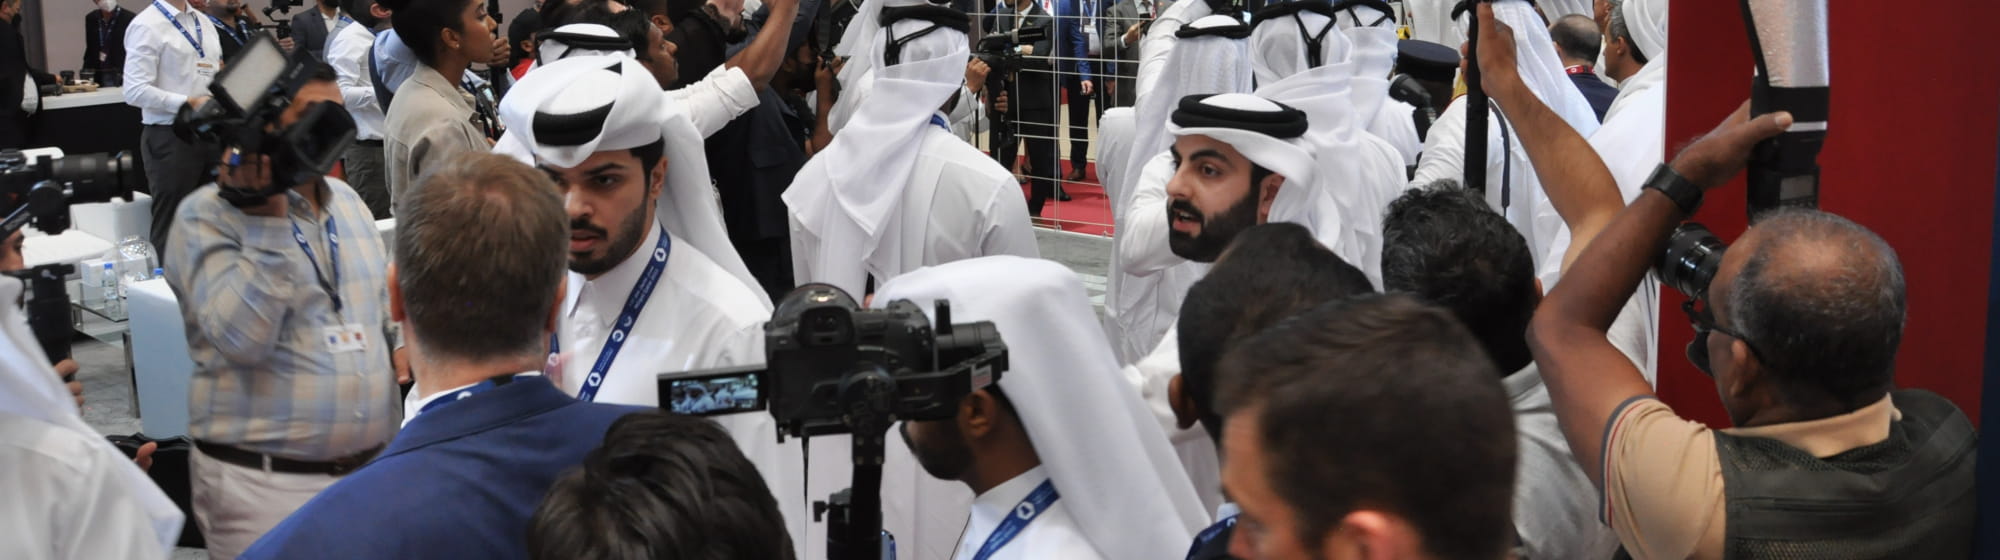 Journalists and exhibitors at Milipol Qatar